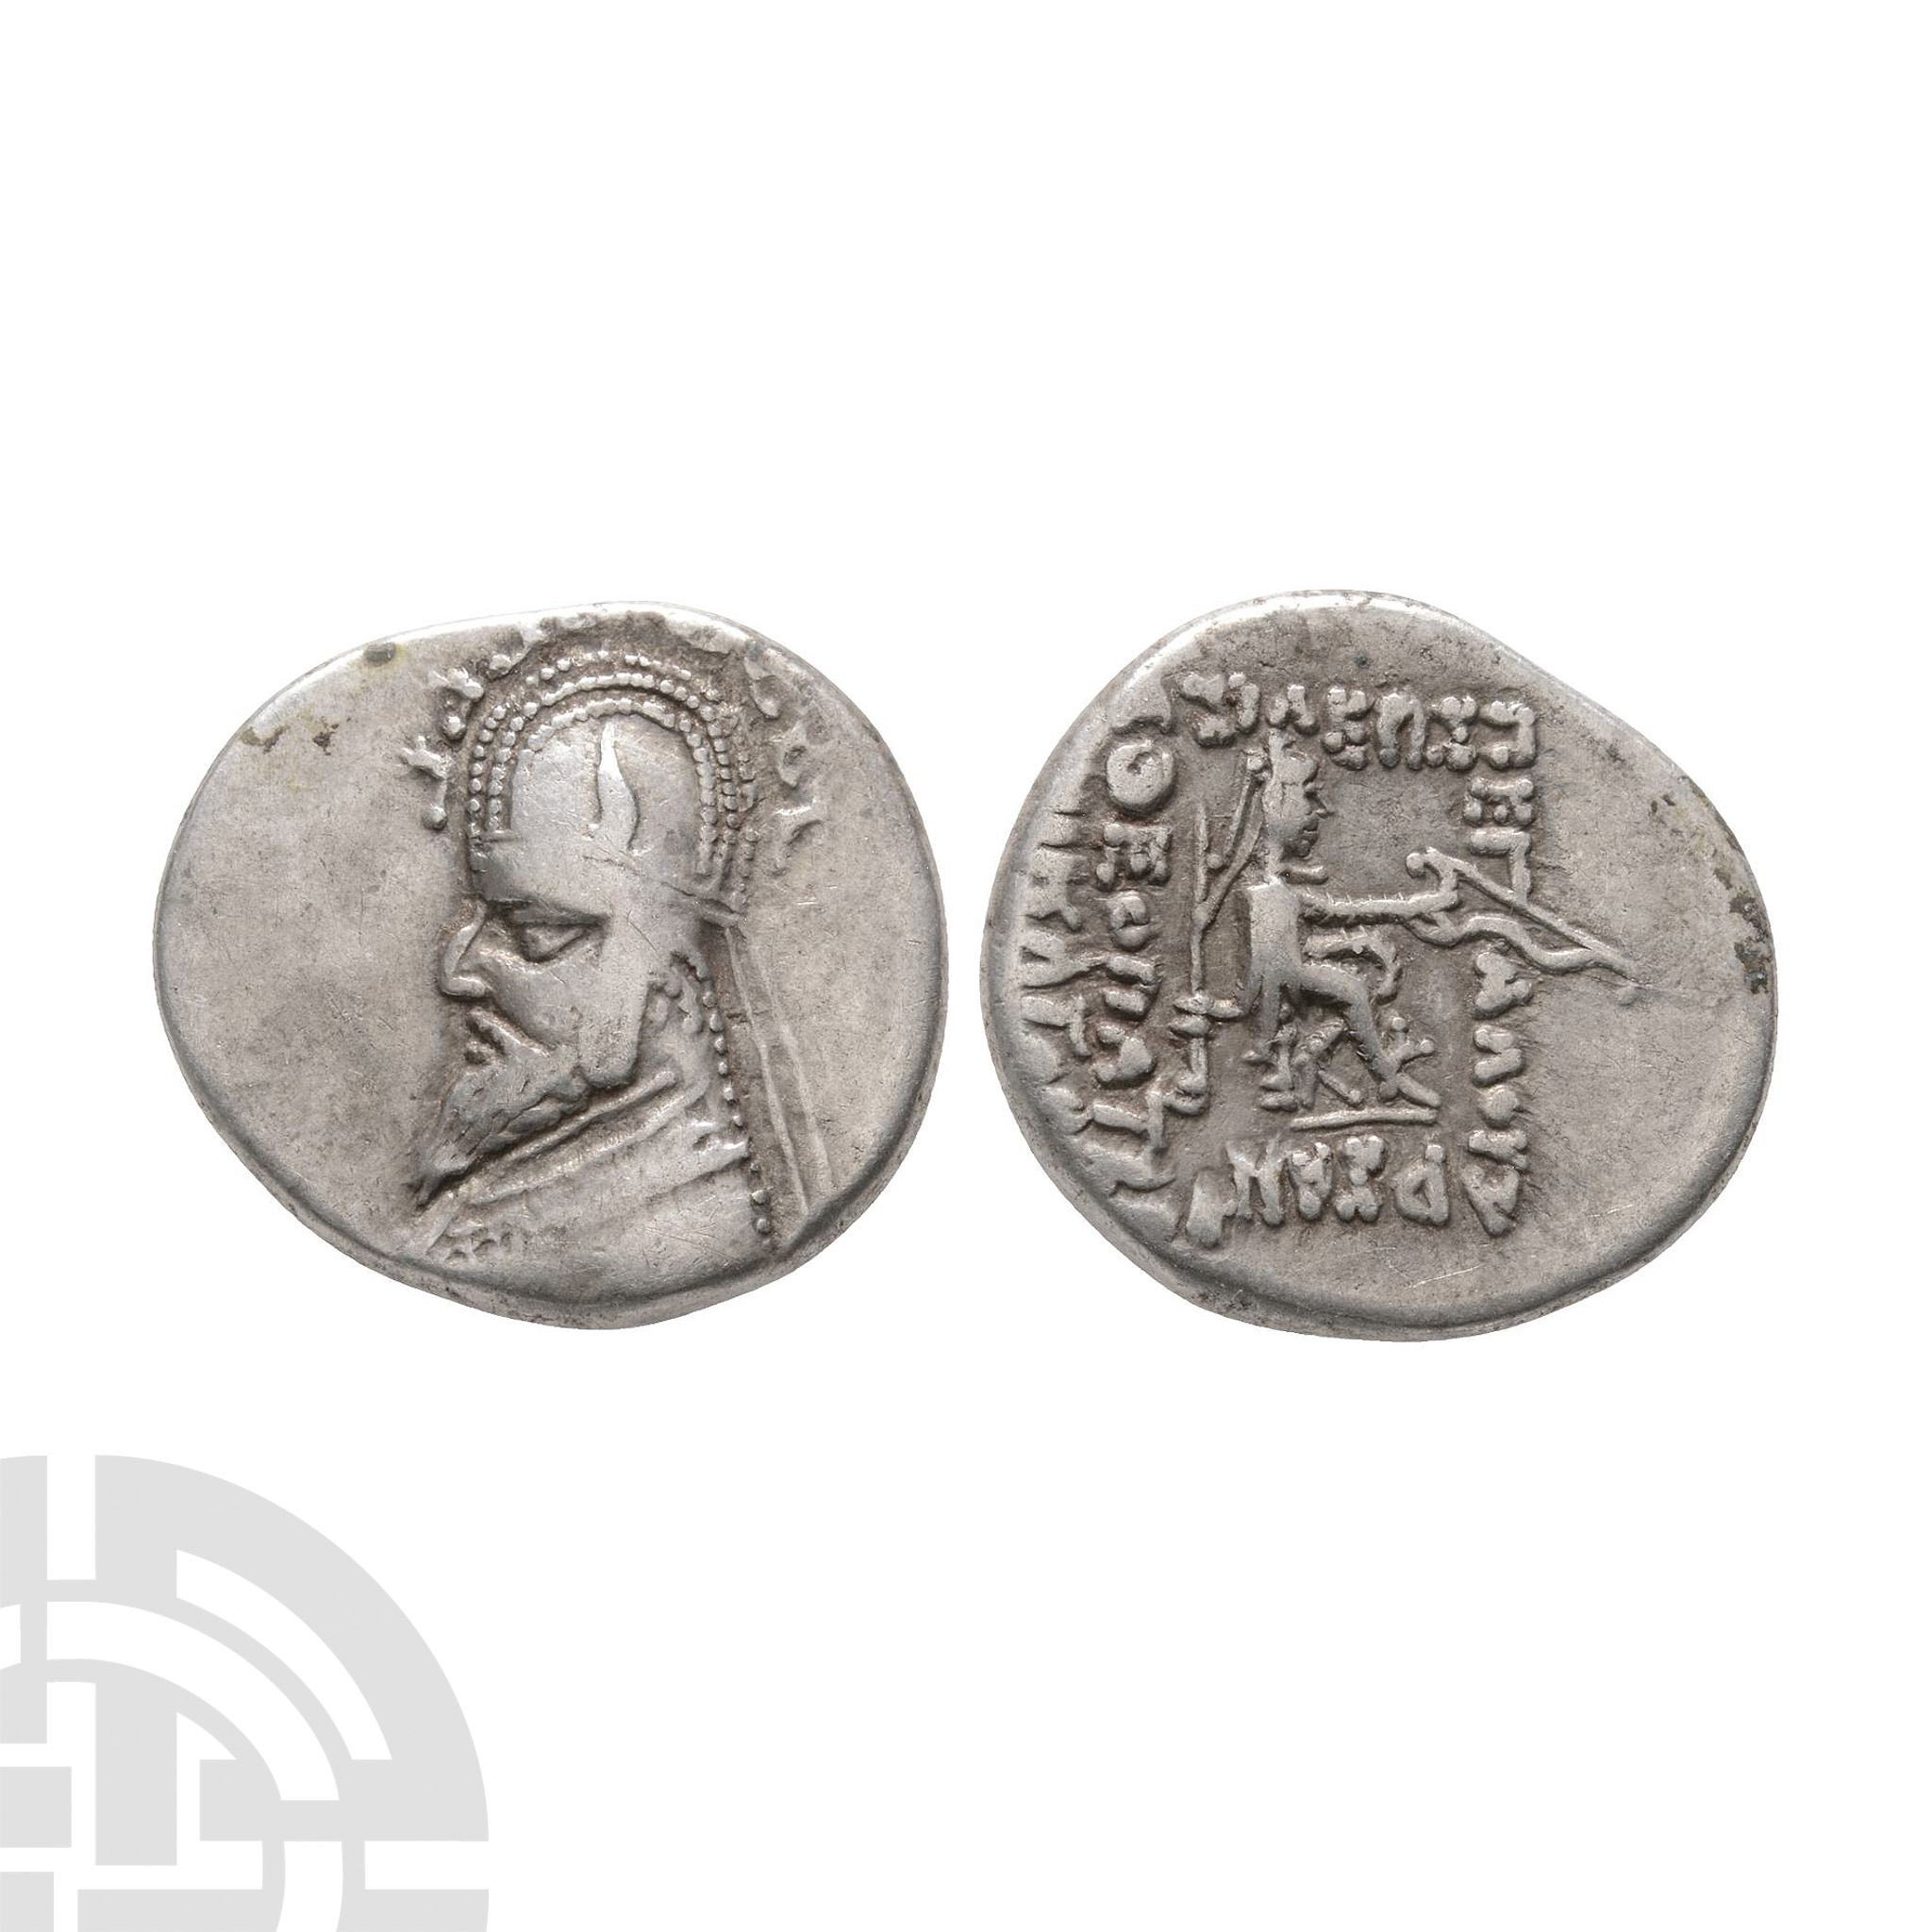 Ancient Greek Coins - Parthian Dynasty - Sinatrukes - AR Drachm